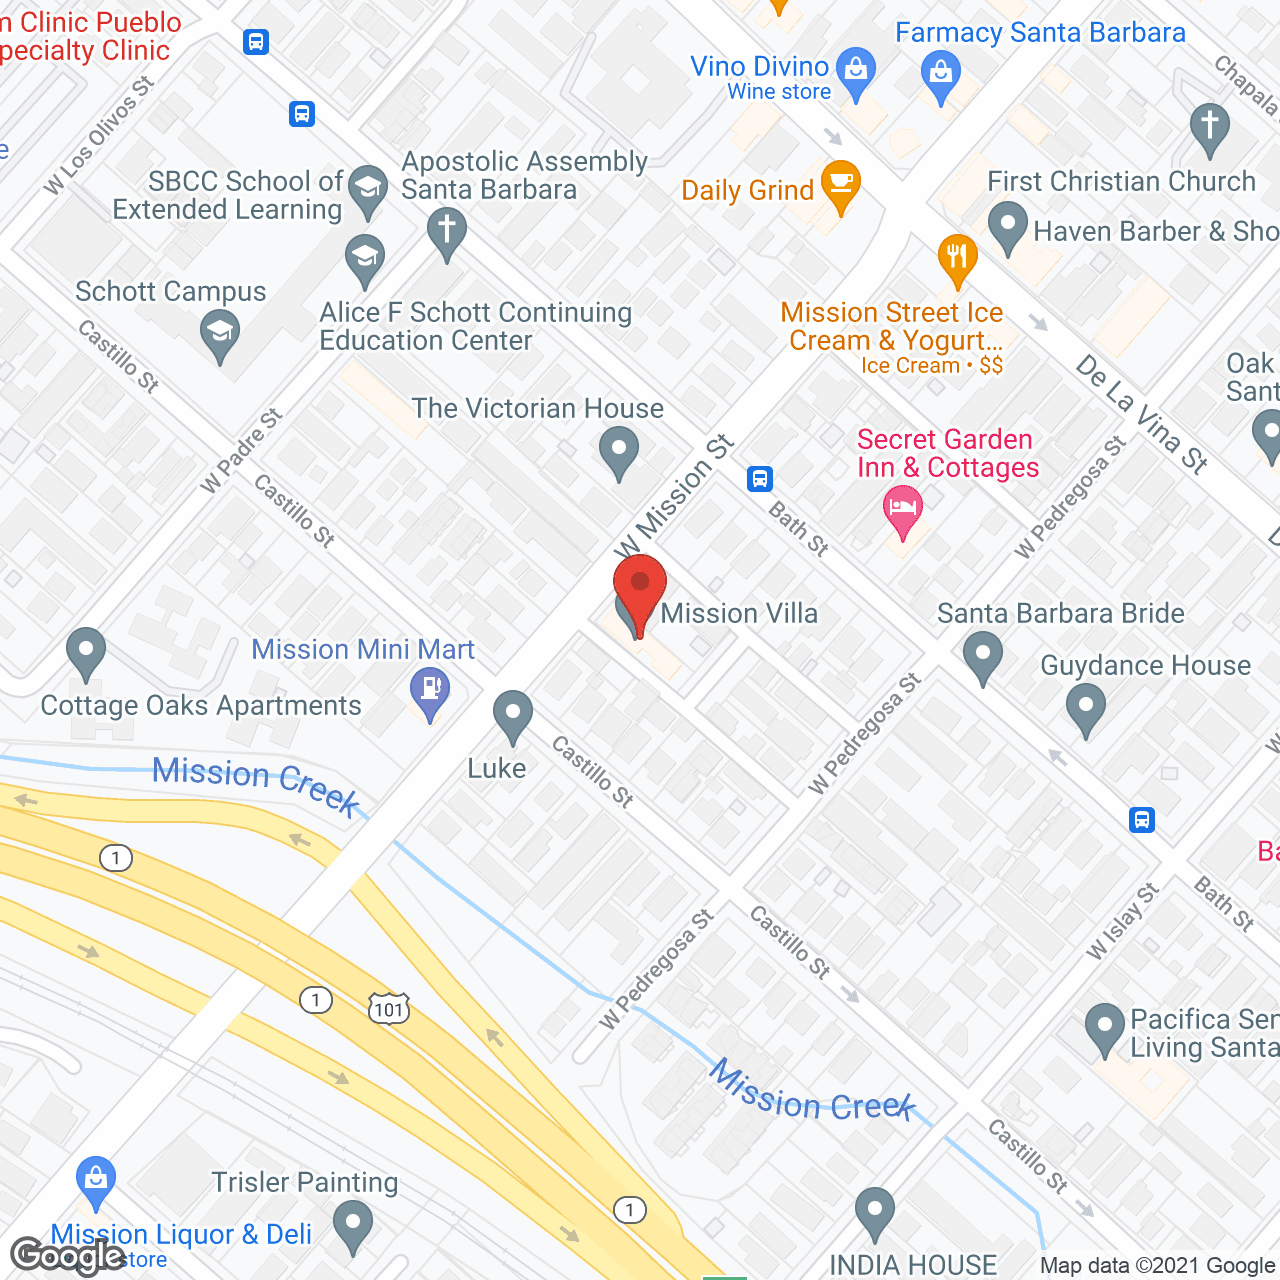 Mission Villa in google map